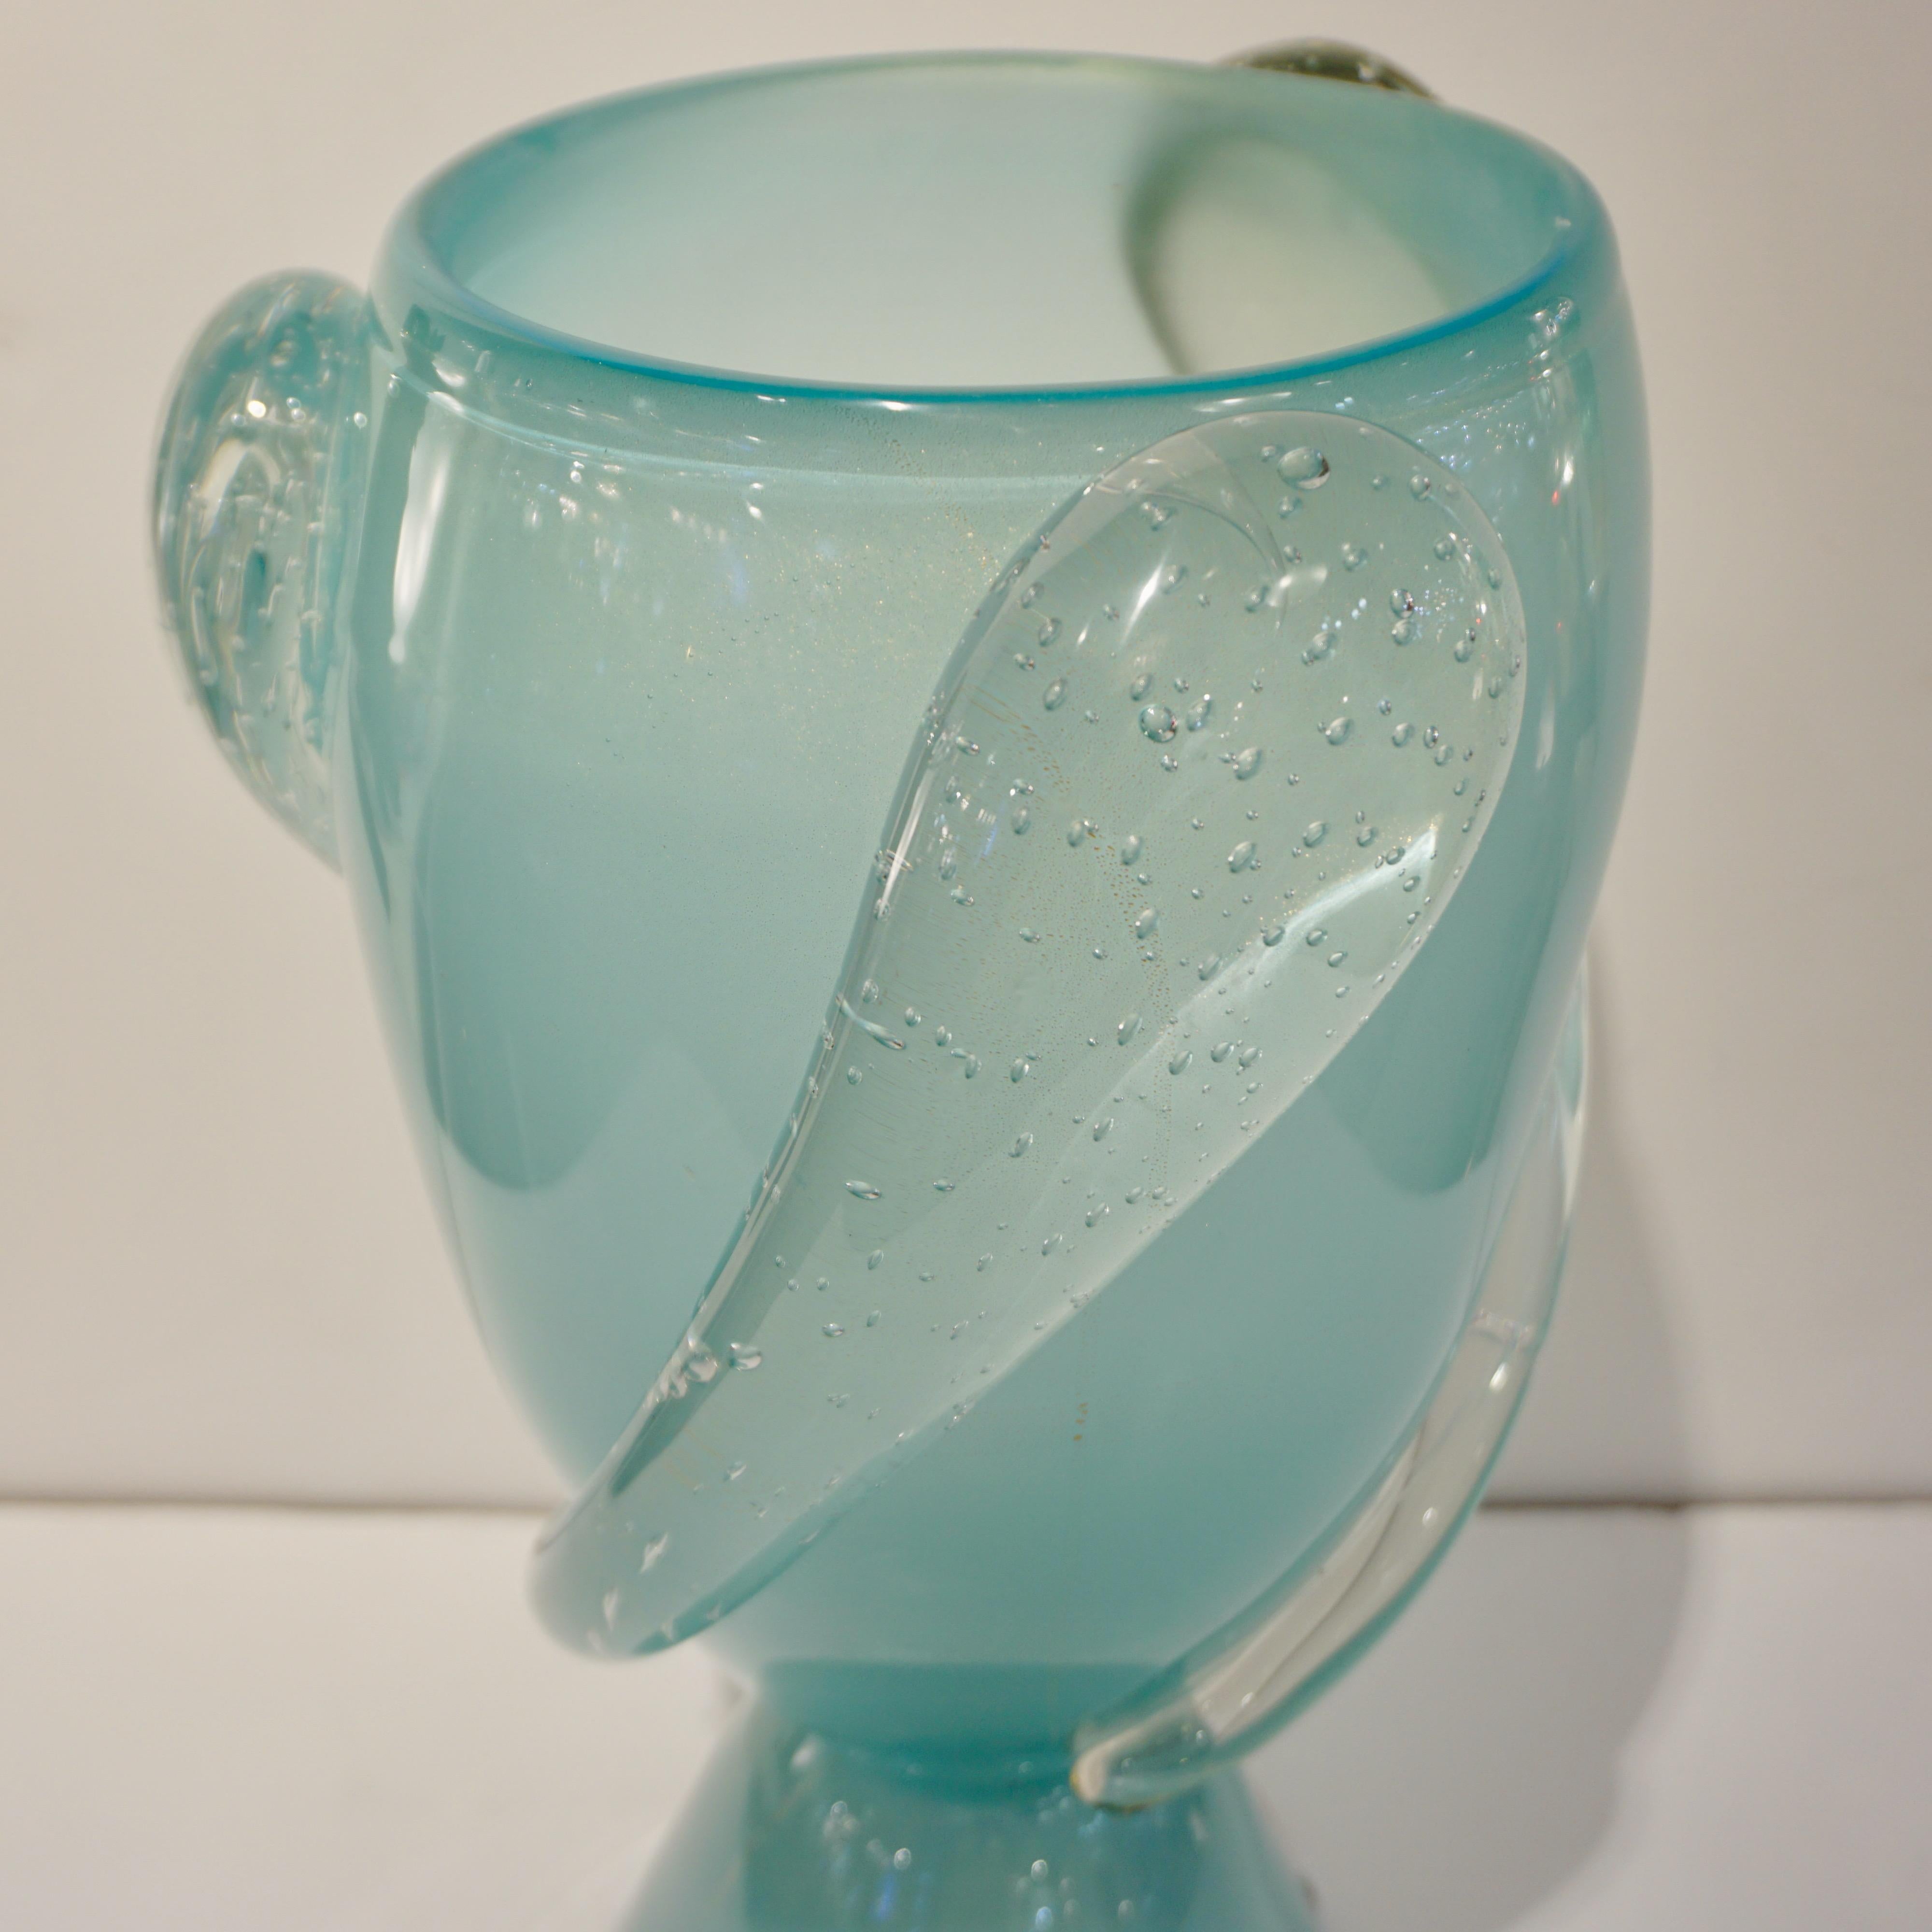 Barovier Toso Lampe organique en verre de Murano bleu aqua, contemporaine et moderne italienne en vente 2